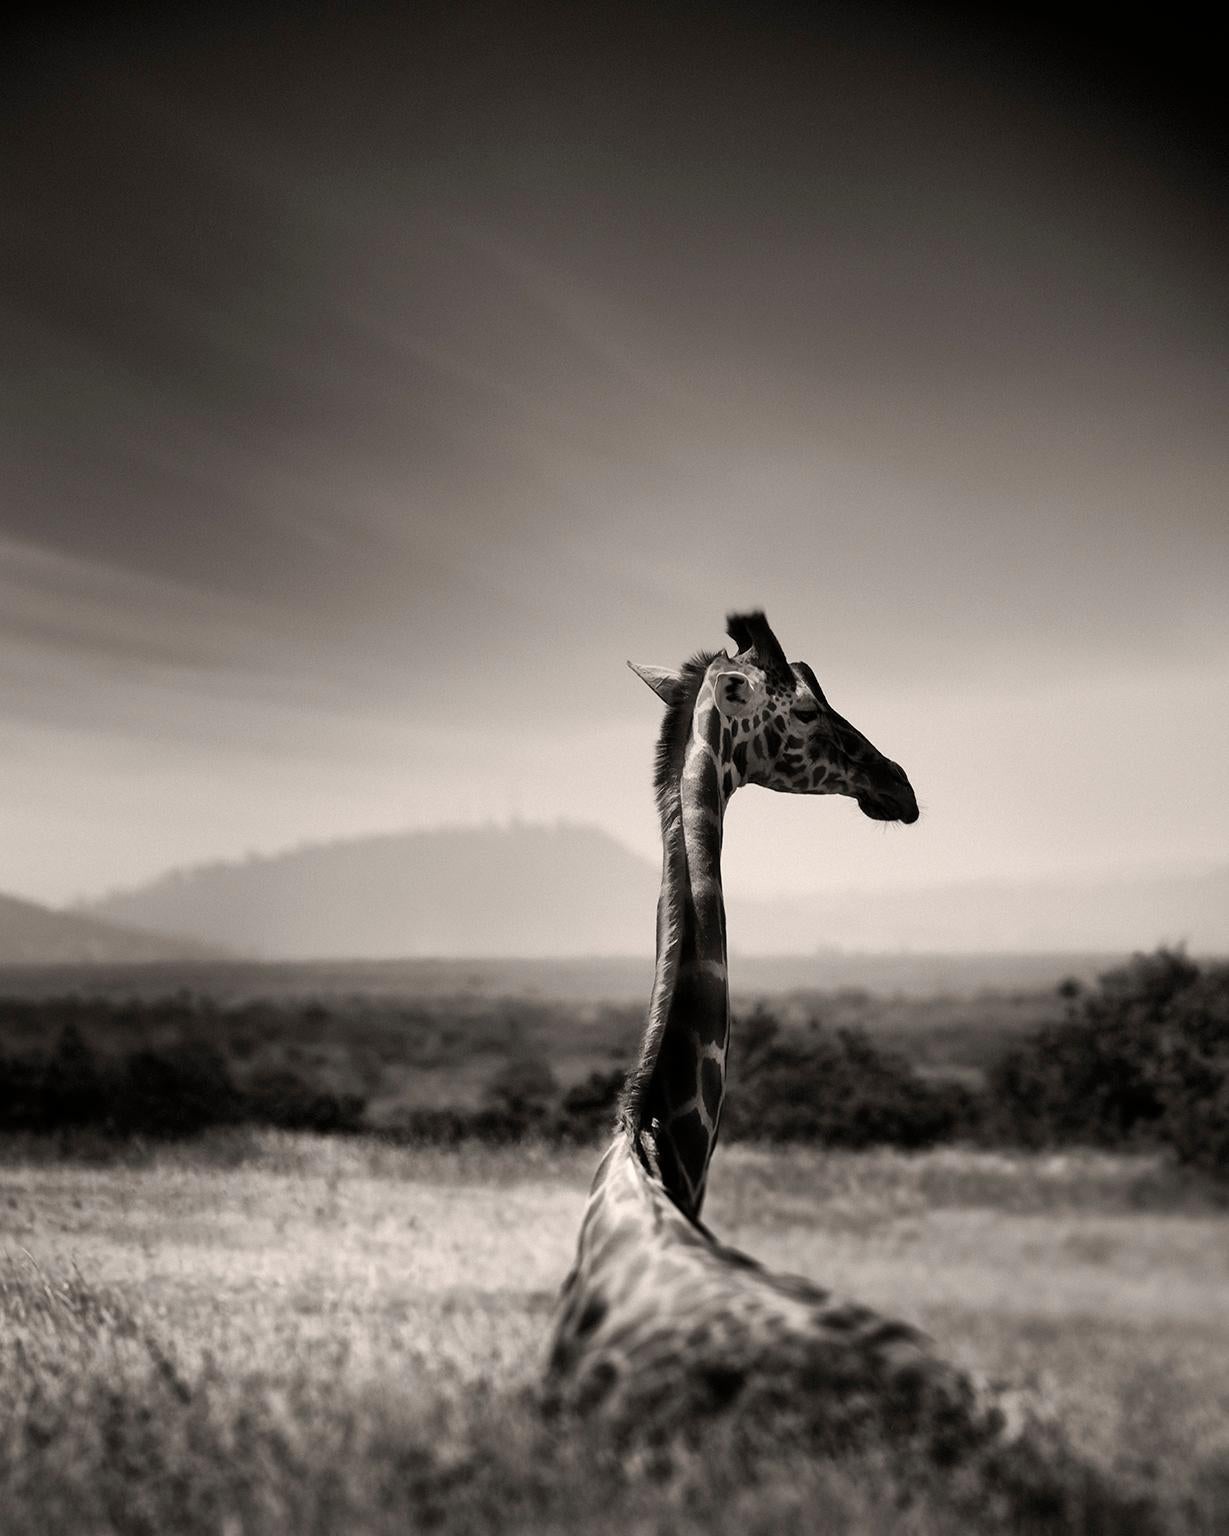 Joachim Schmeisser Black and White Photograph - Giraffe in grass, Giraffe, animal, Africa, black and white photography